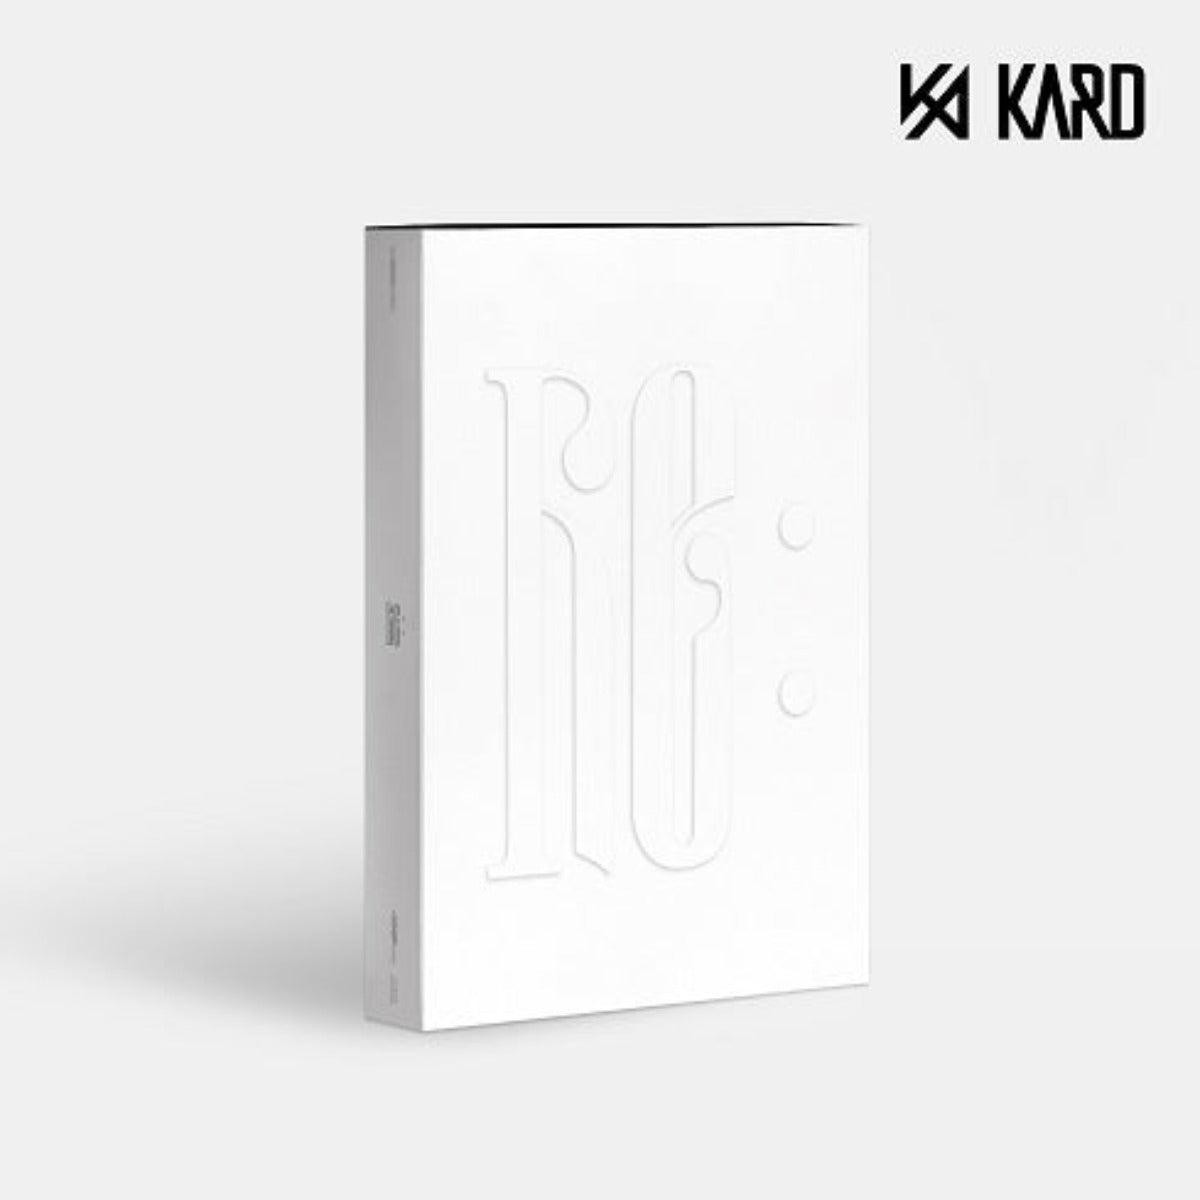 KARD Mini Album Vol. 5 - Re: